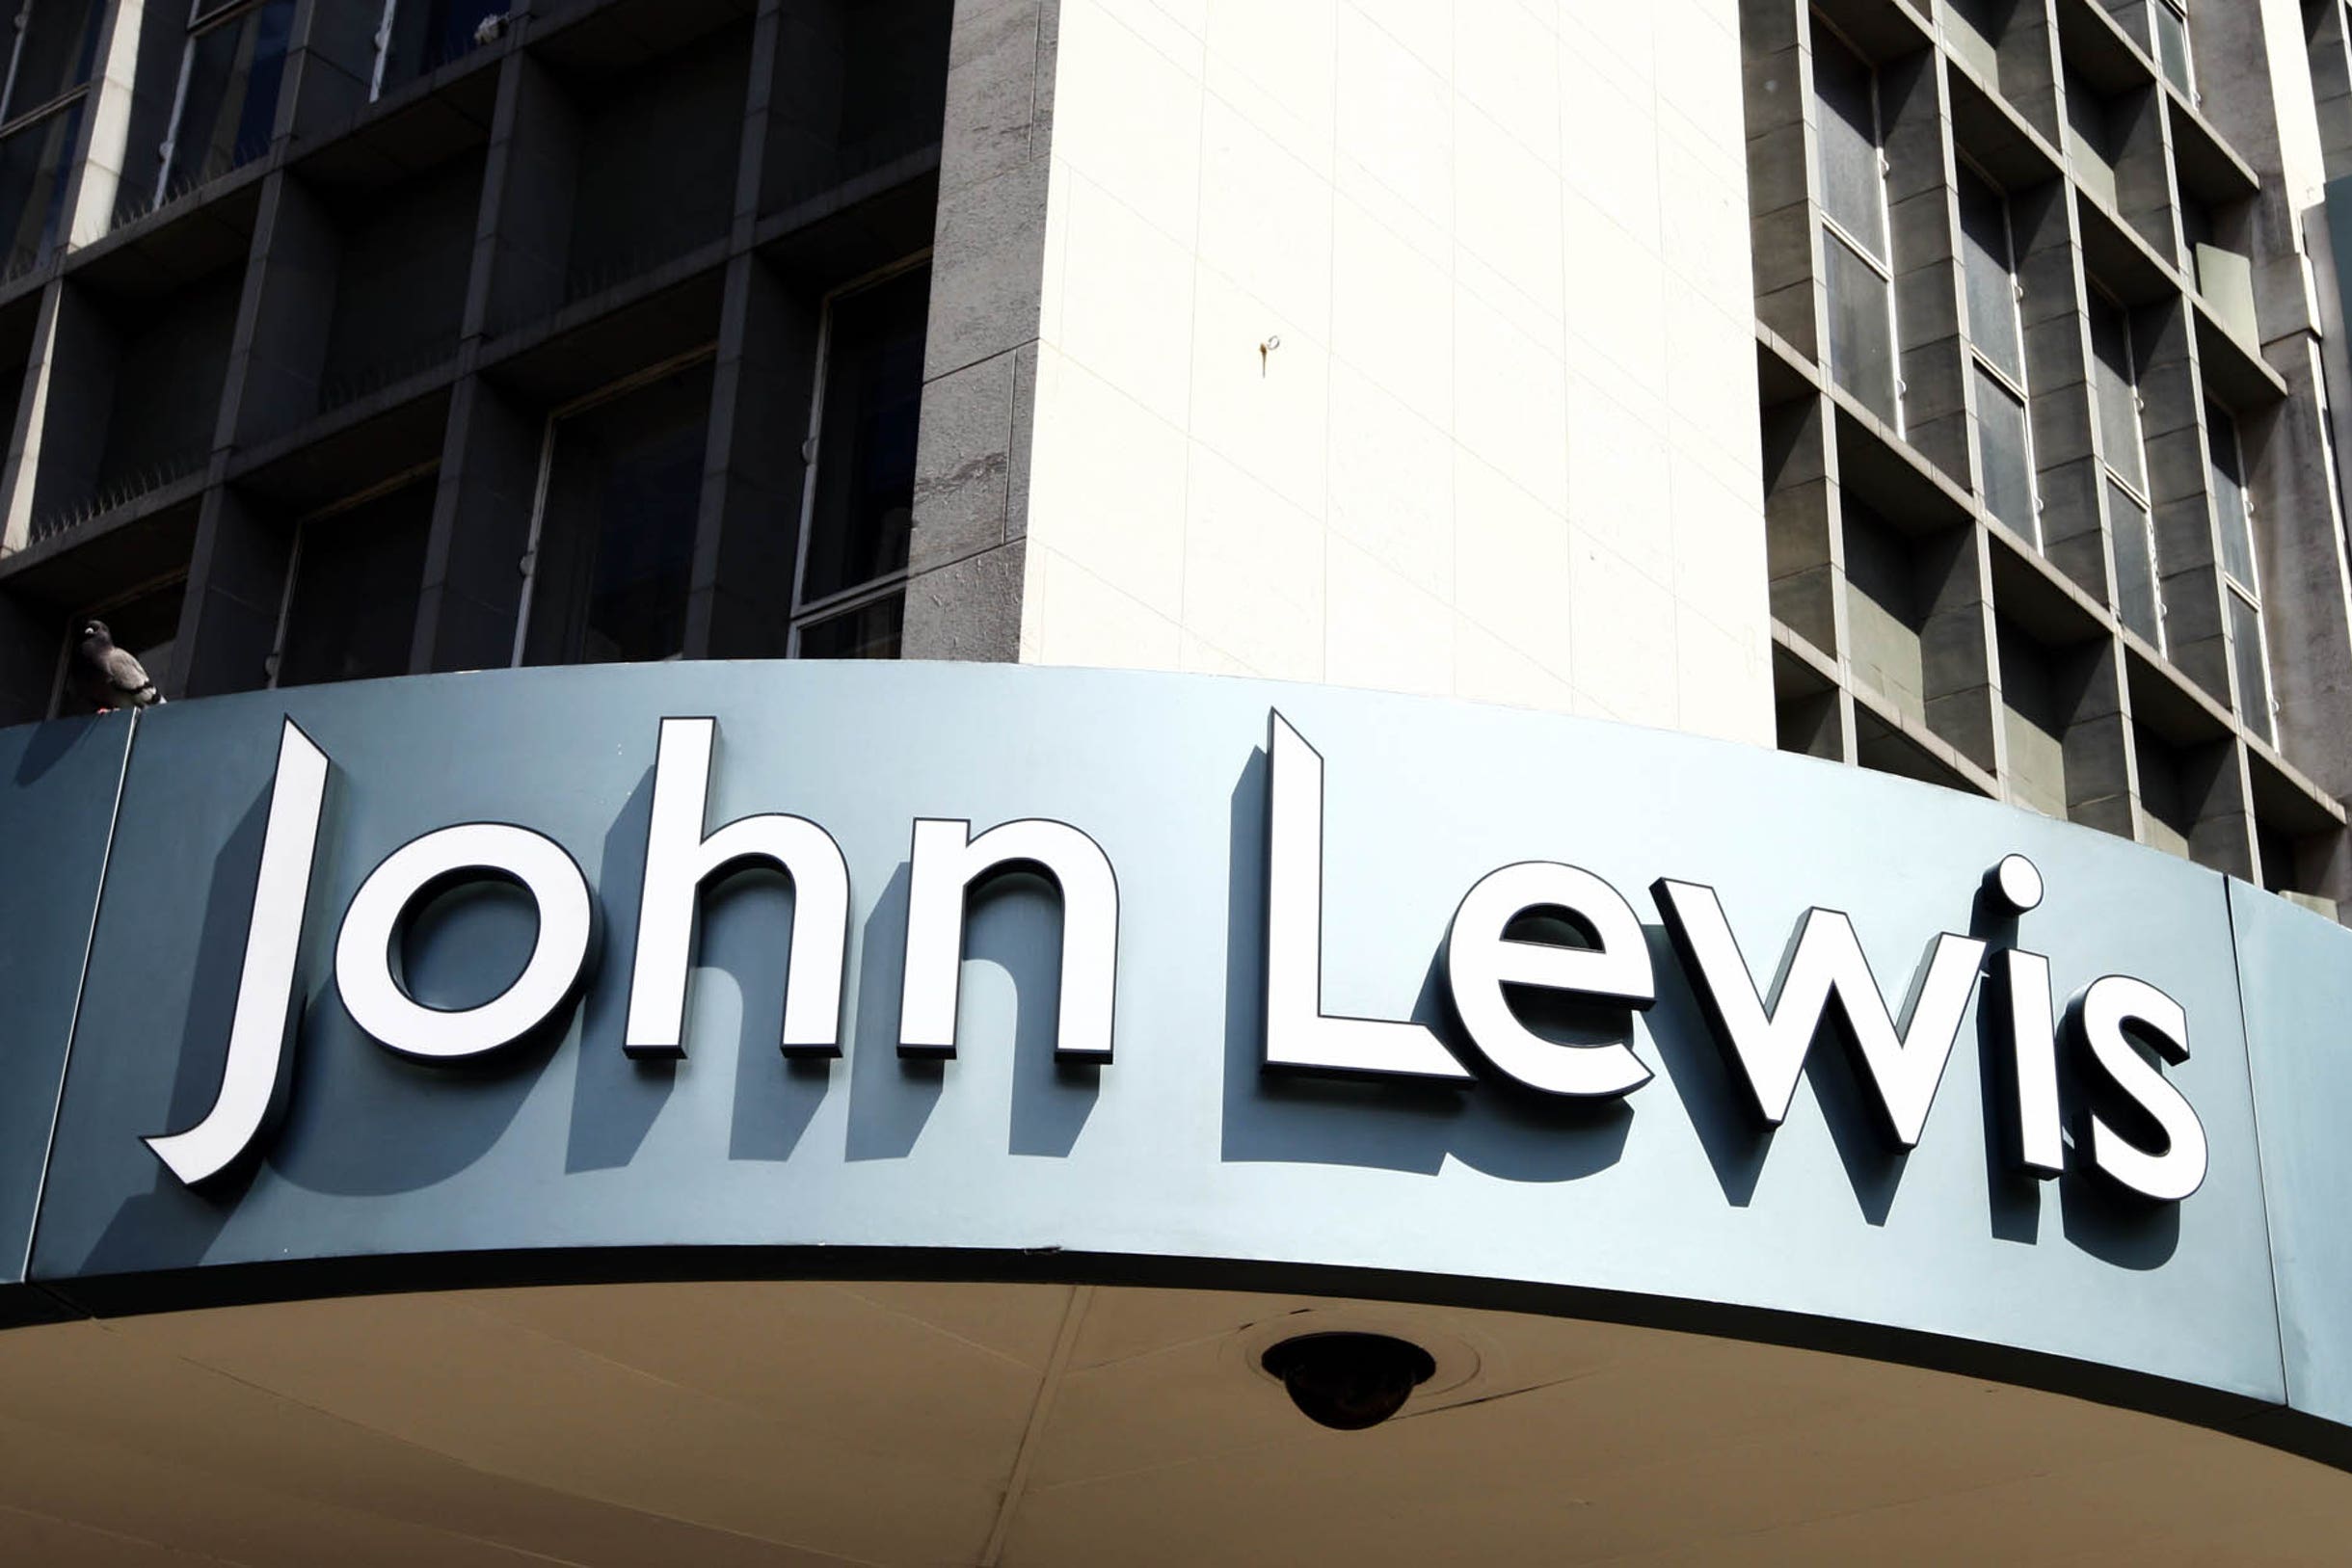 Department store John Lewis